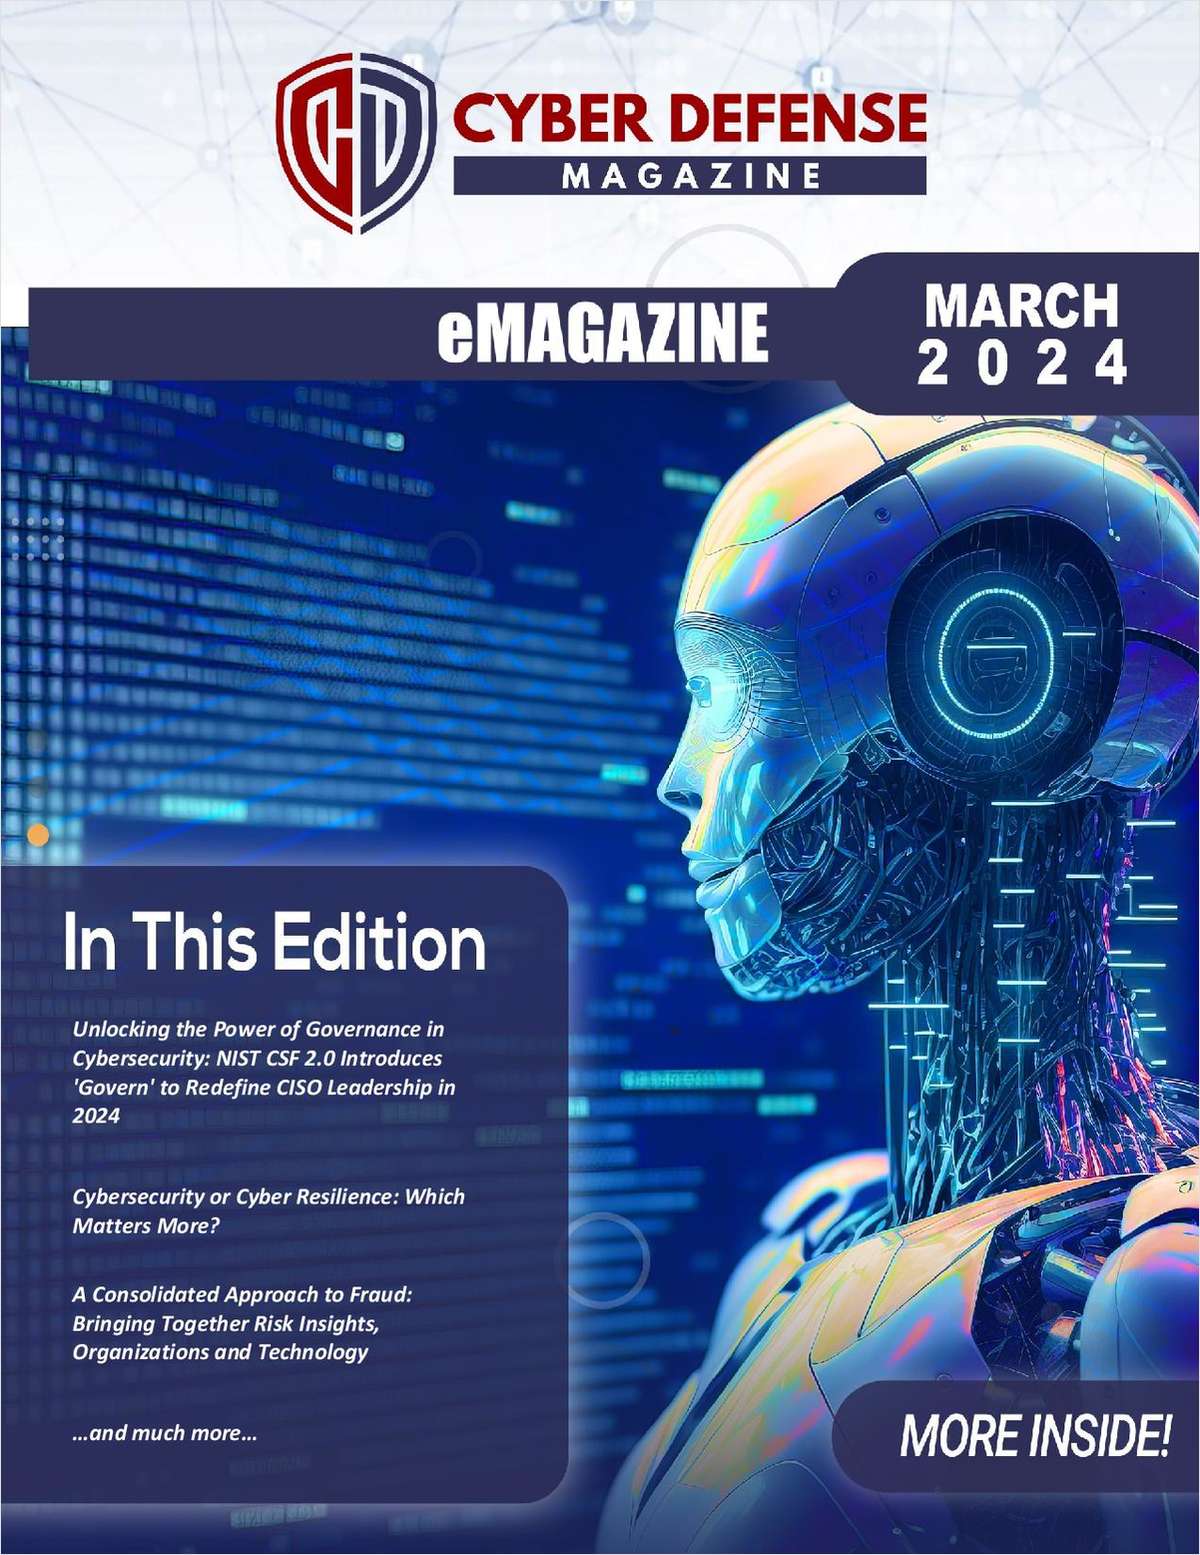 Cyber Defense Magazine March Edition for 2024